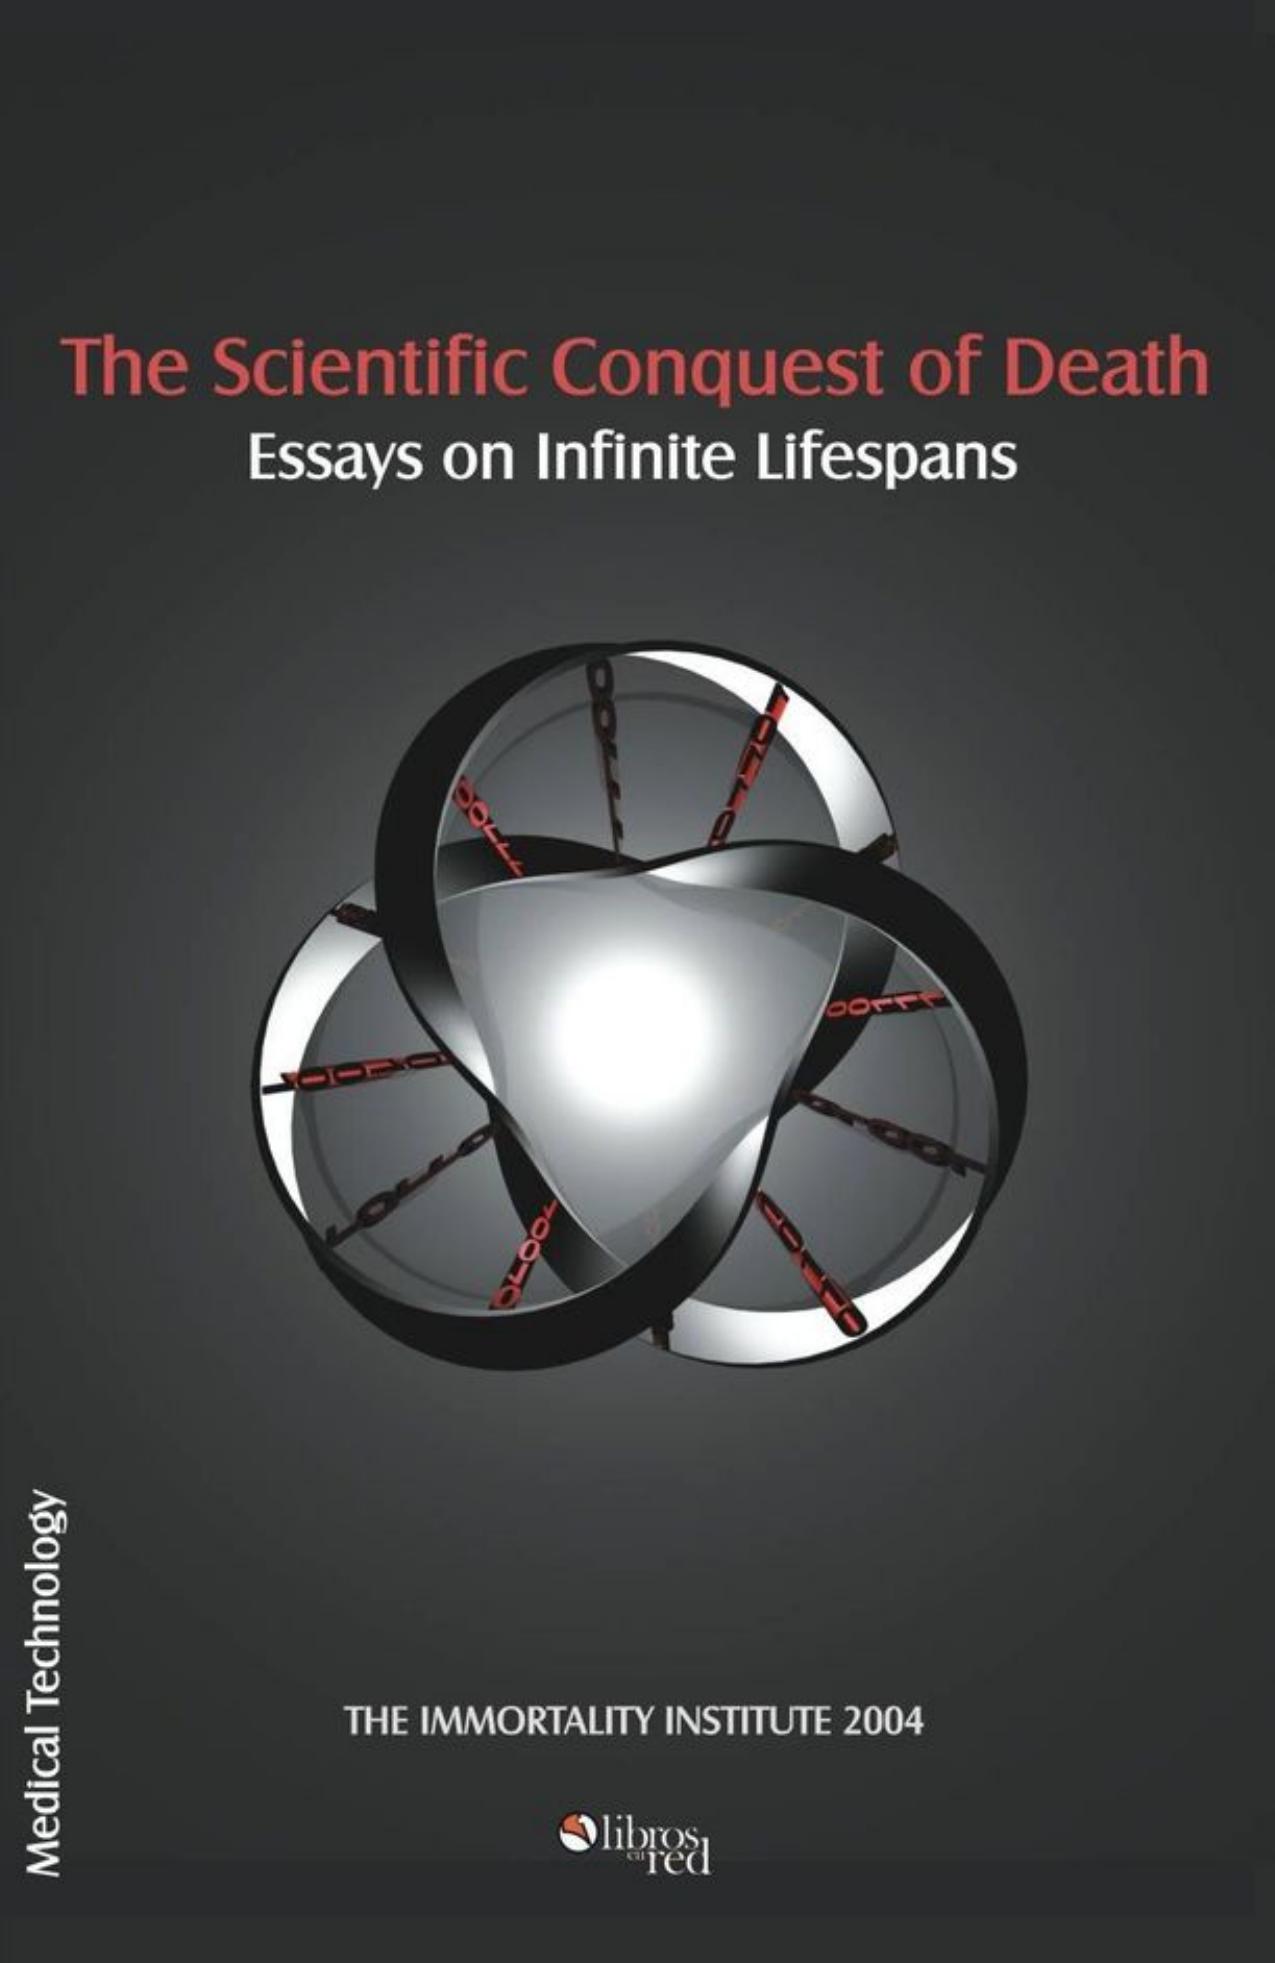 The Scientific Conquest of Death: Essays on Infinite Lifespans